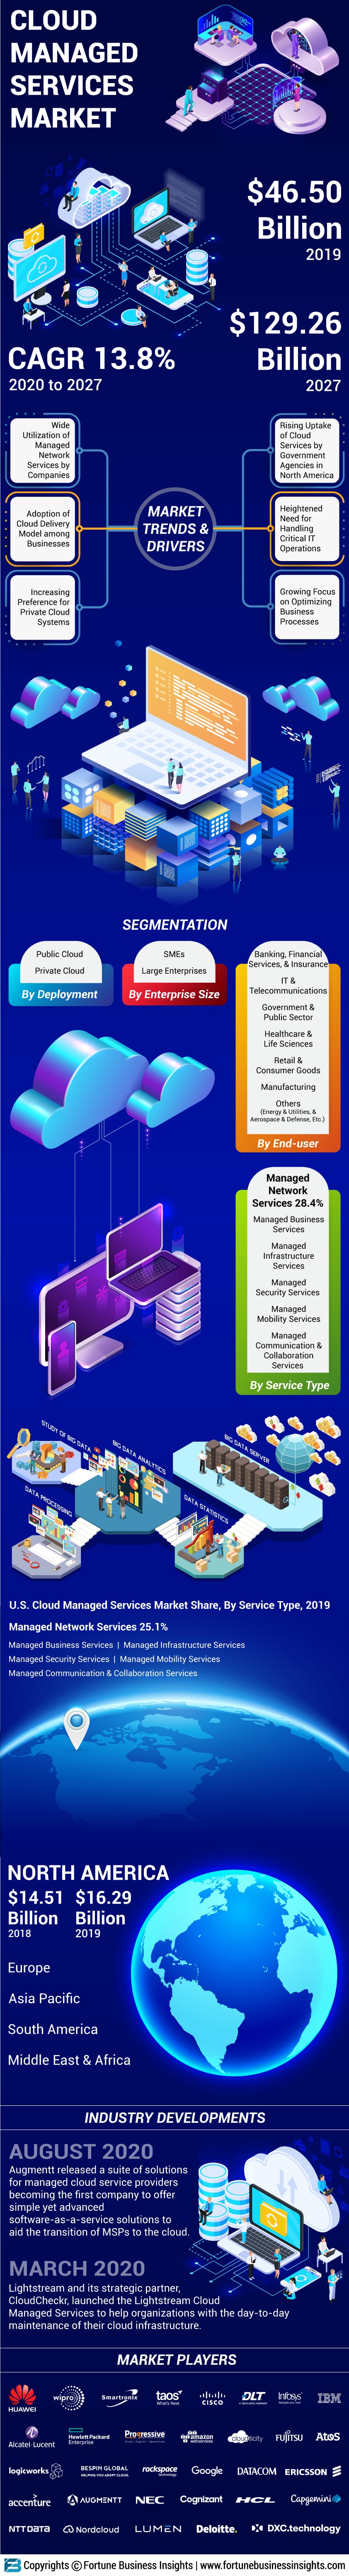 Cloud Managed Services Market 